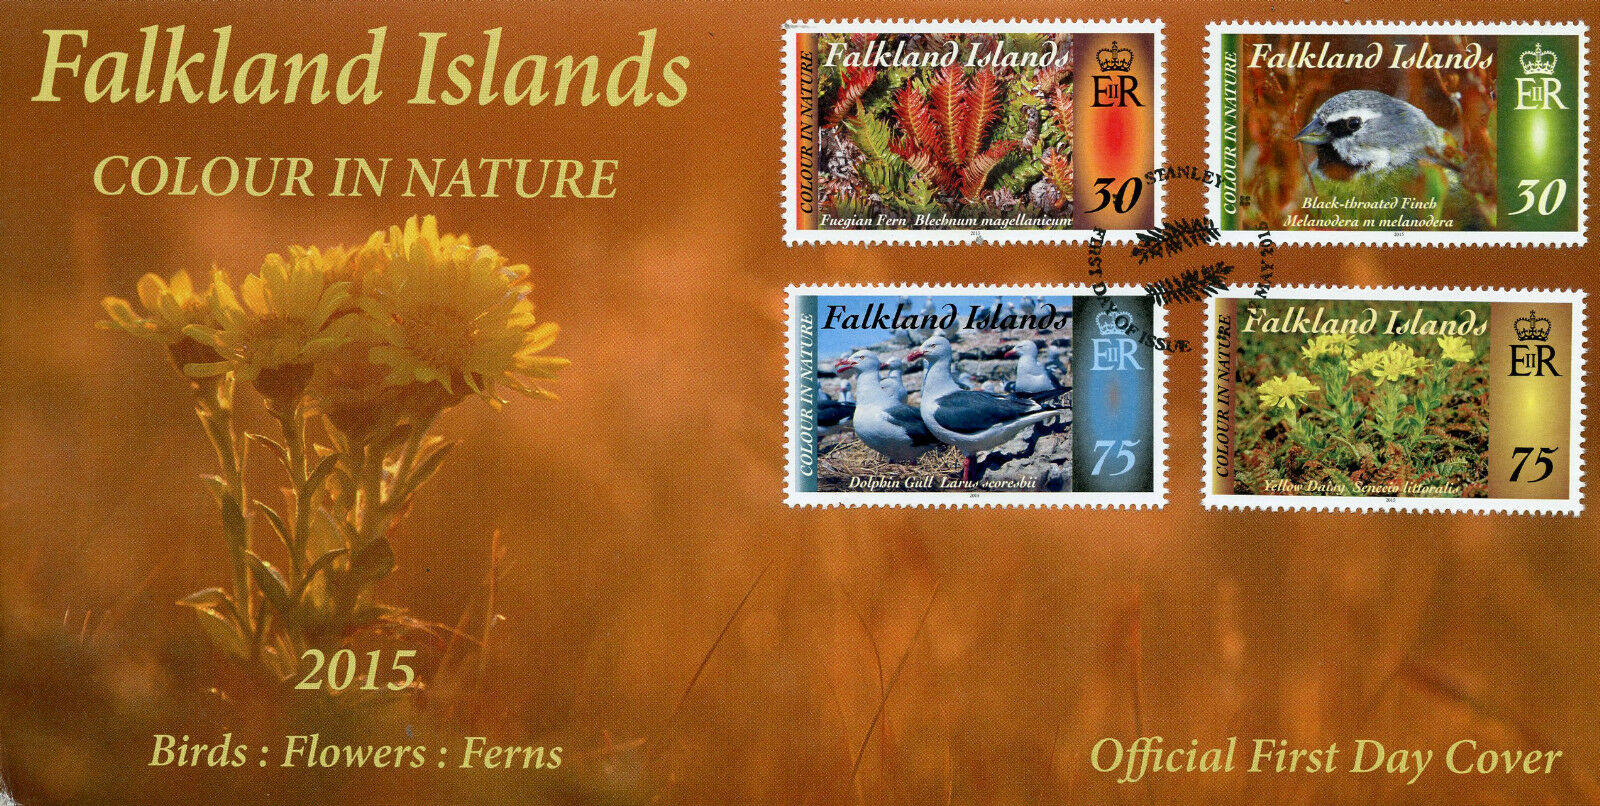 Falkland Islands 2015 FDC Colour in Nature Pt 4 4v Set Cover Birds Ferns Flowers